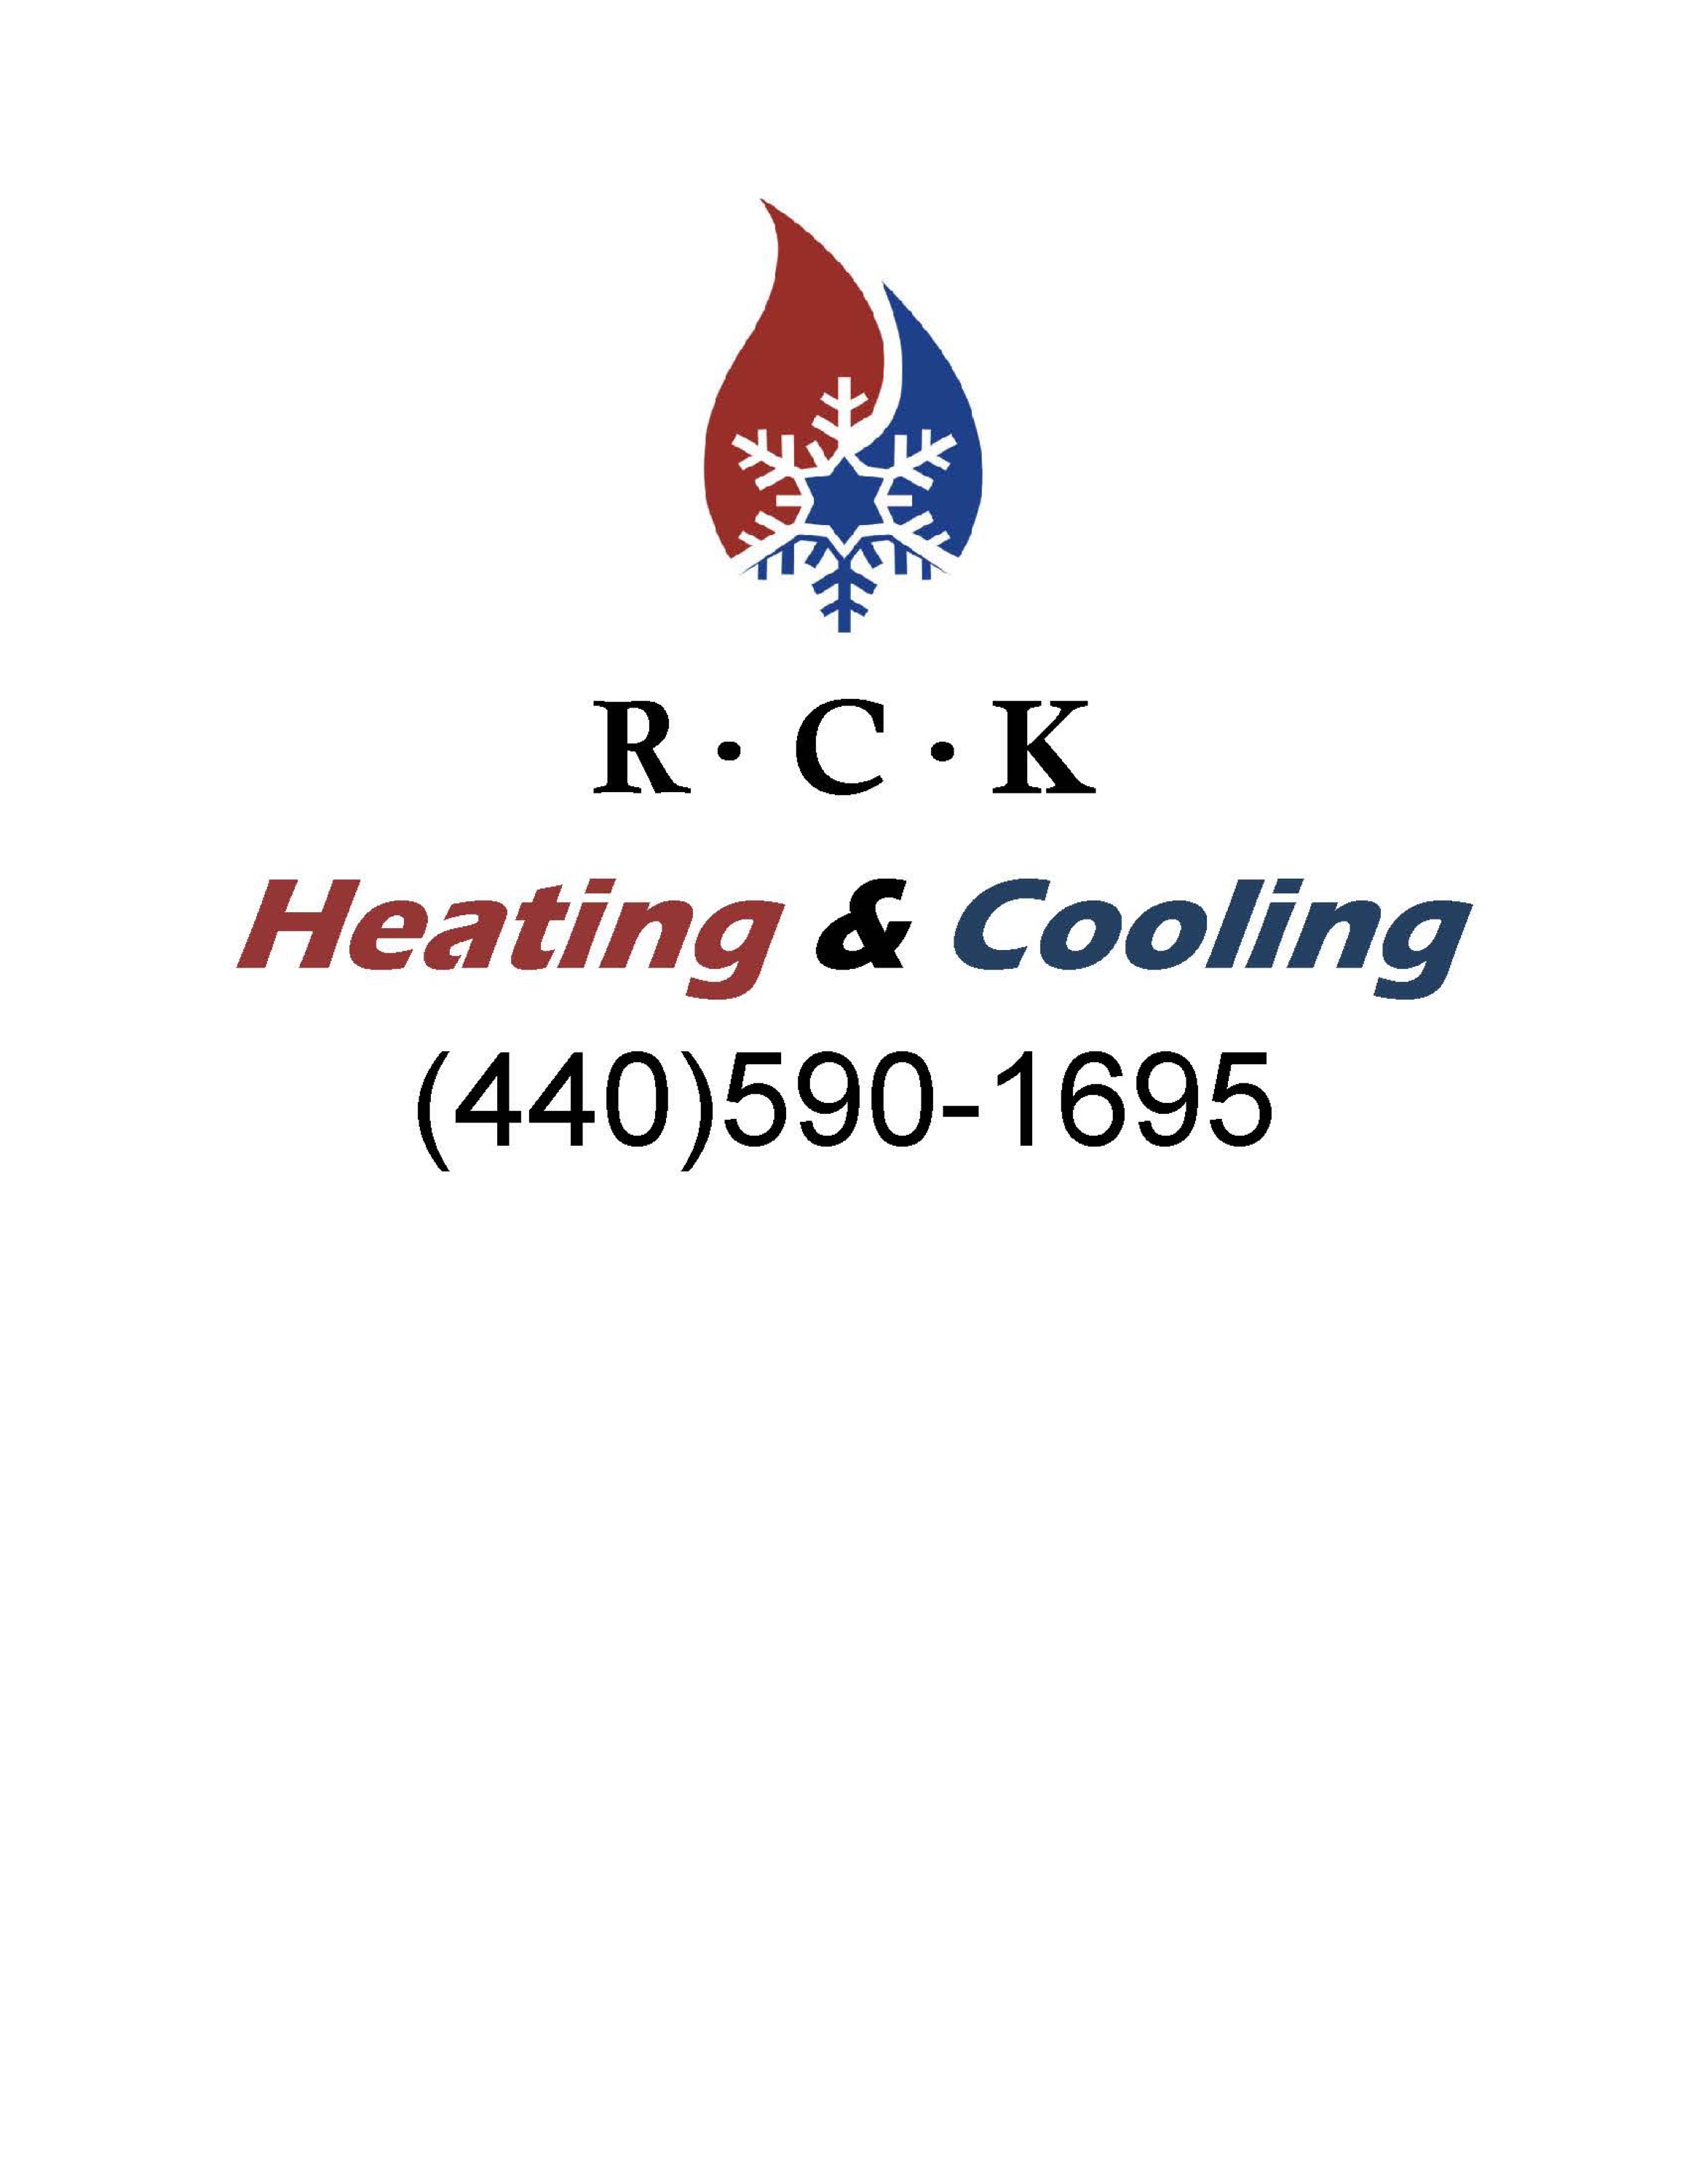 RCK Heating and Cooling, LLC Logo